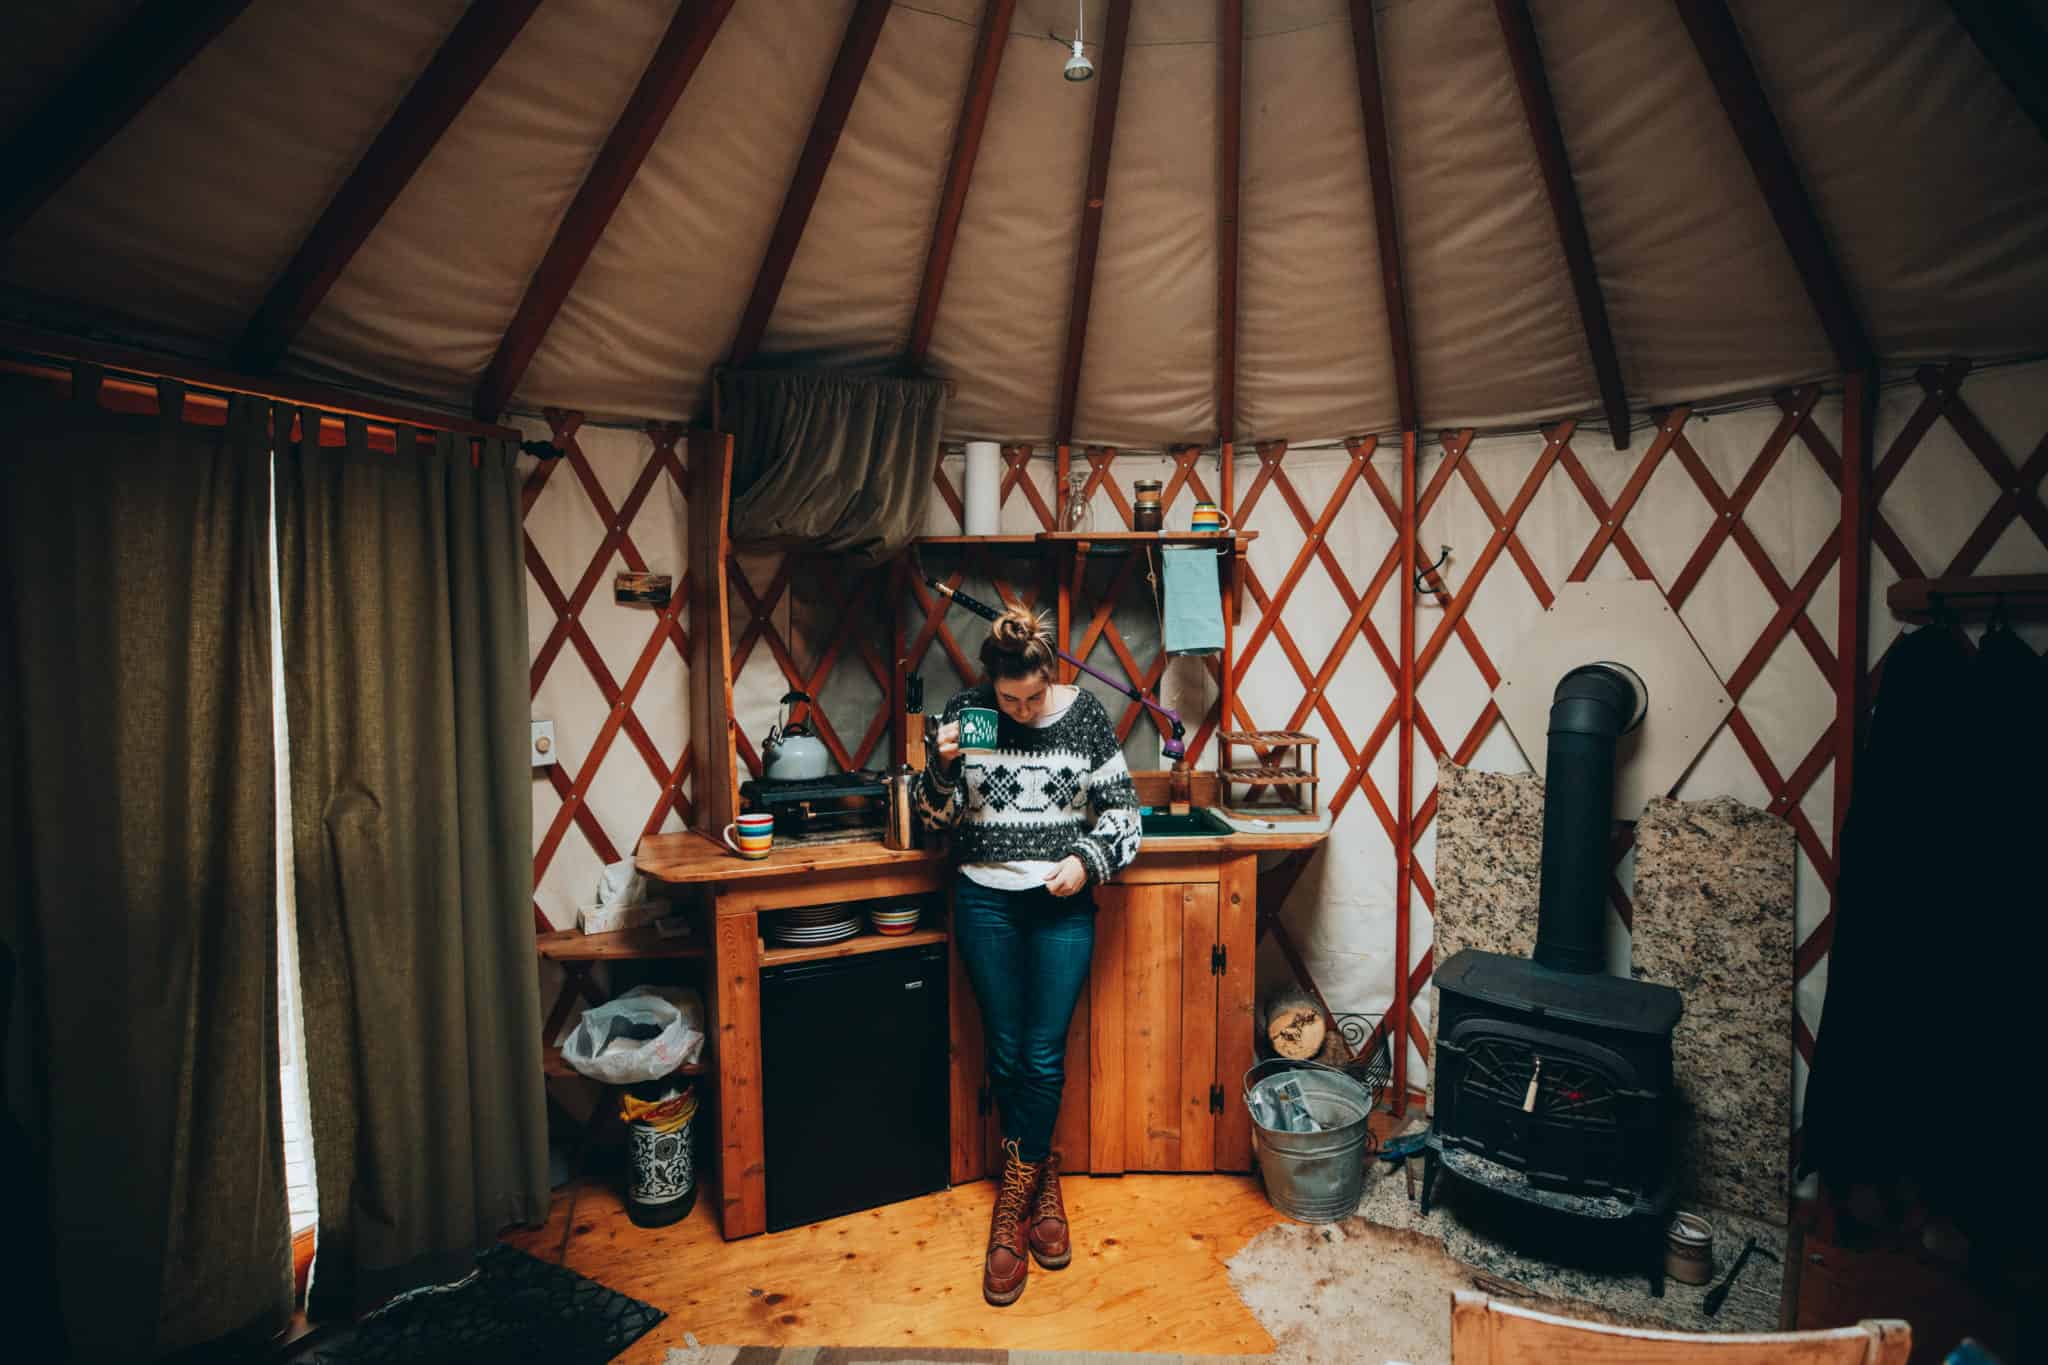 emily inside yurt with coffee mug